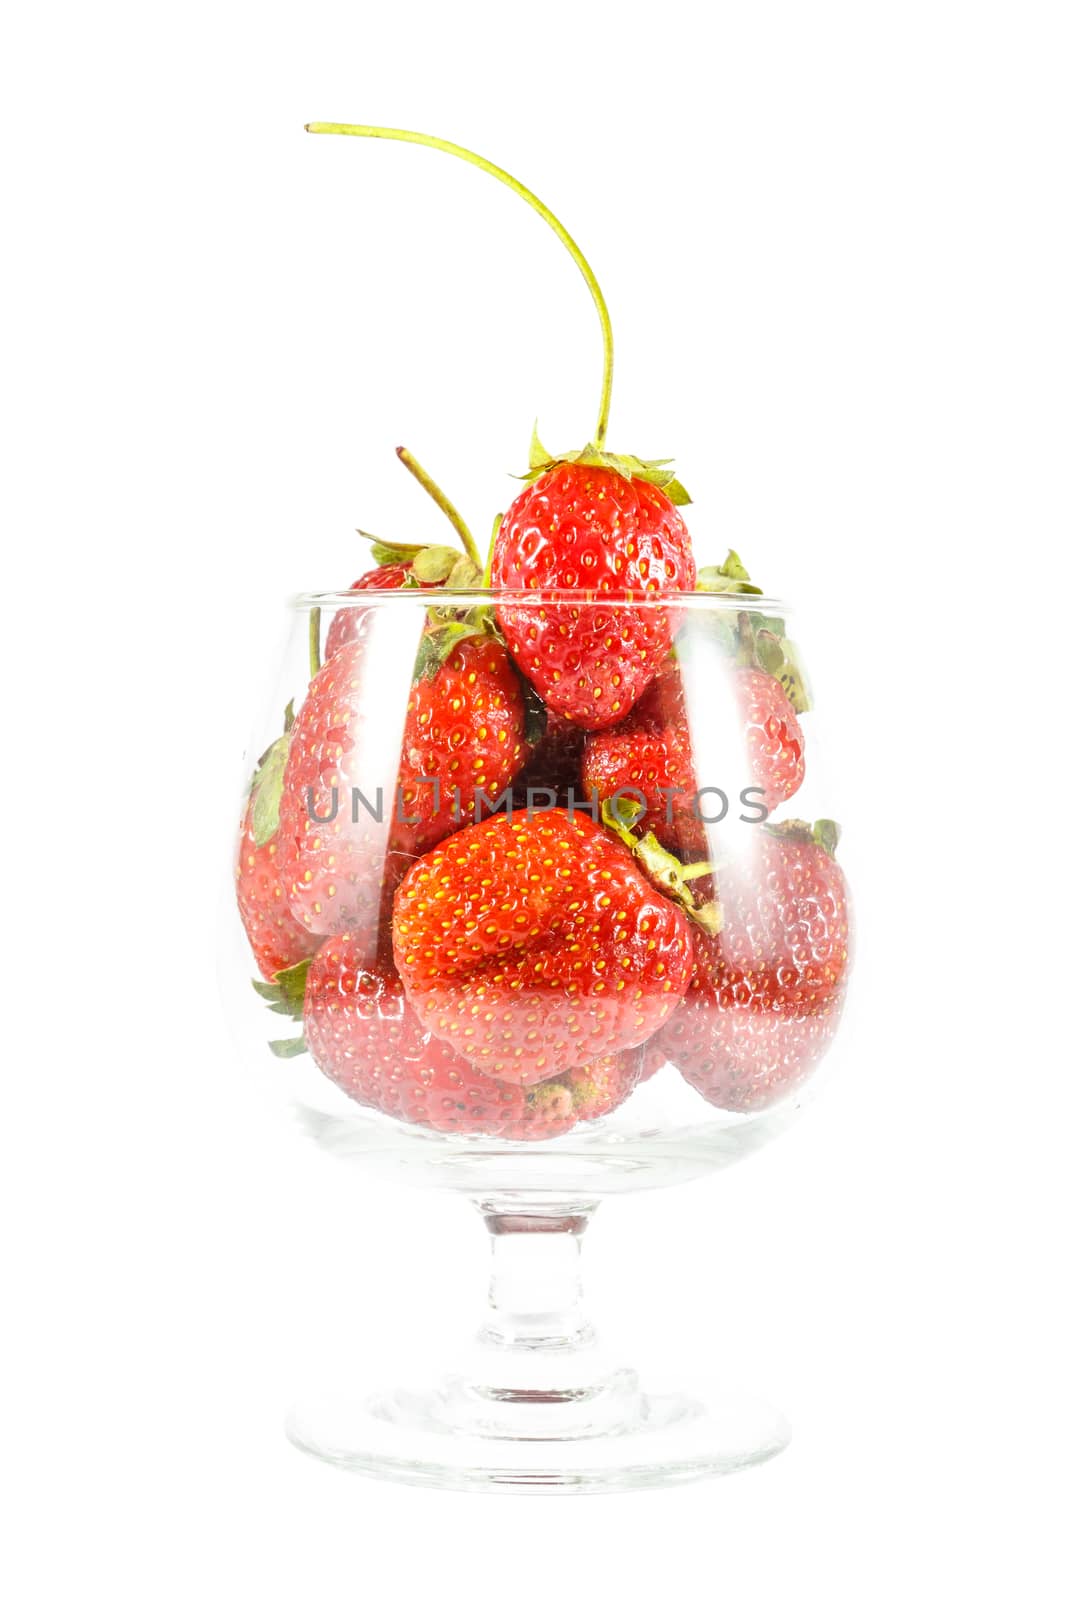 Strawberries in wine glass by stockdevil